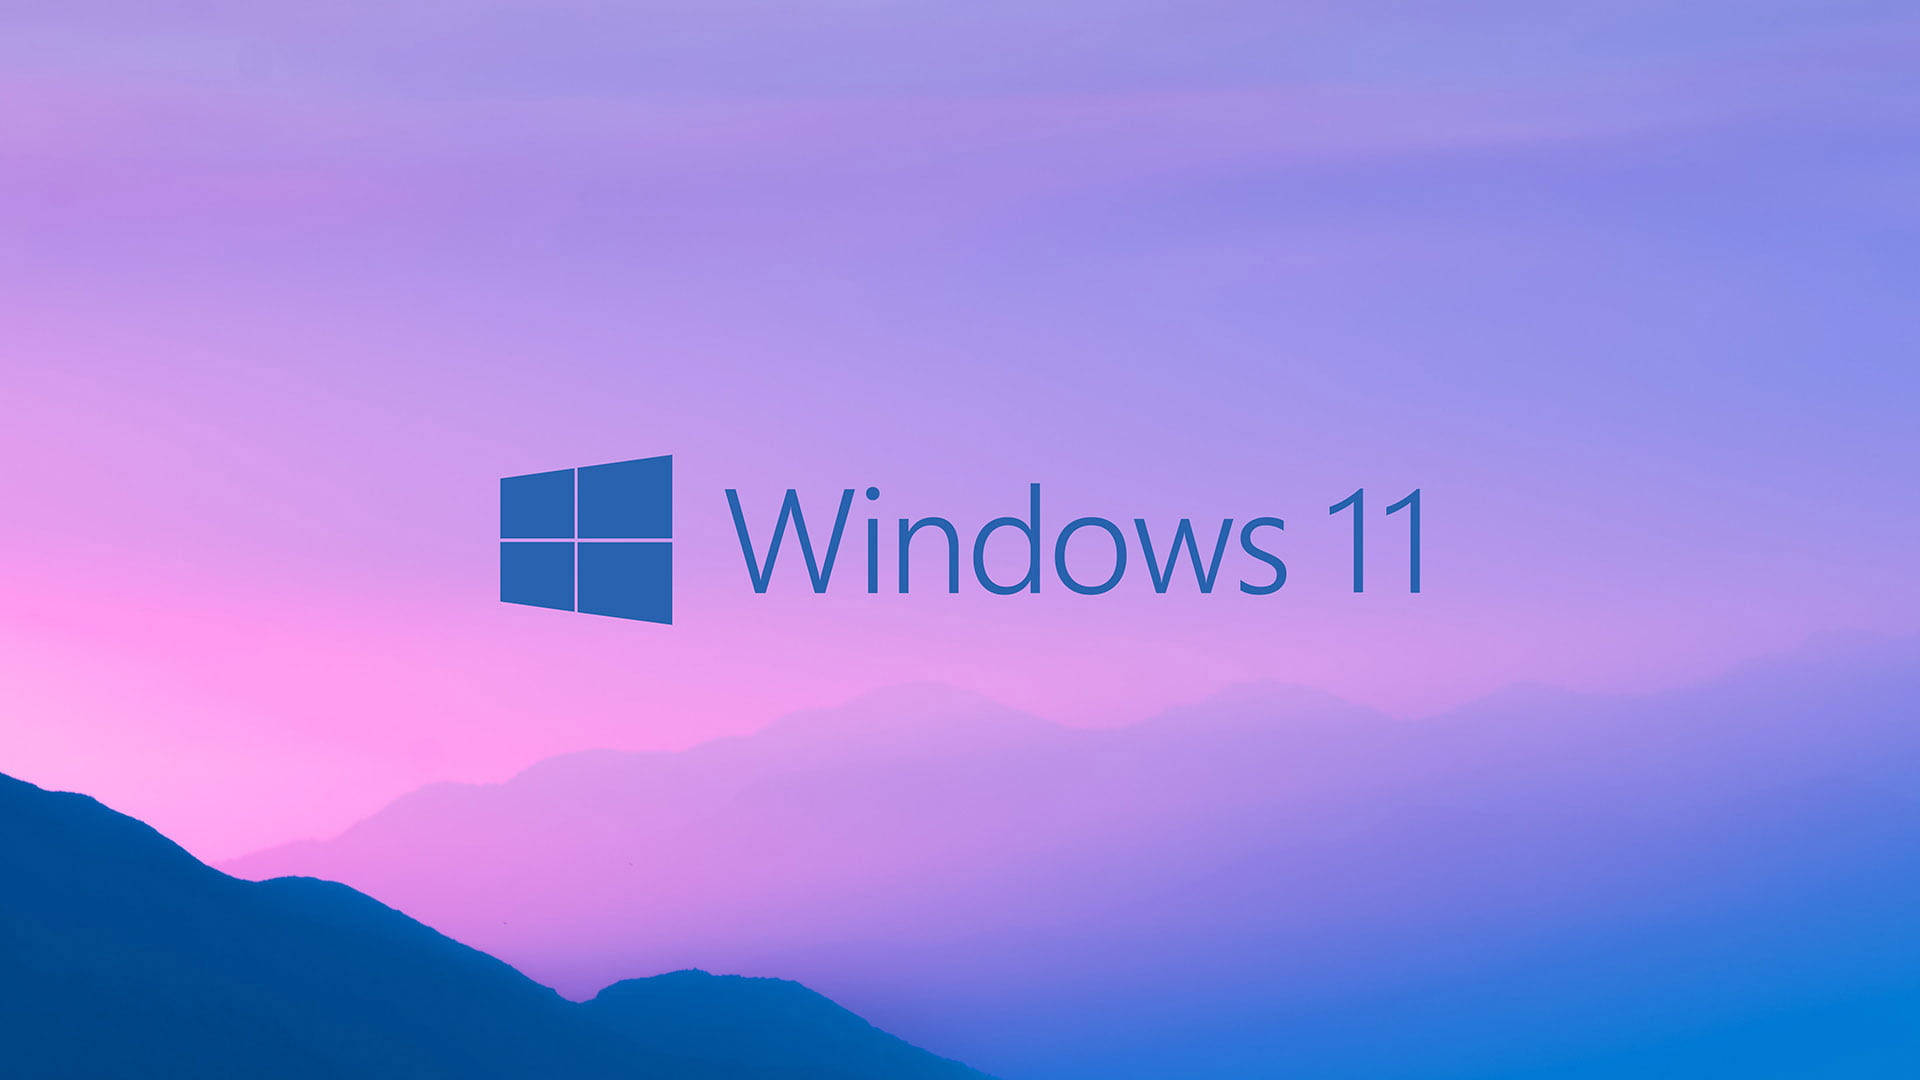 Windows 11 Logo On Purple Background Wallpaper